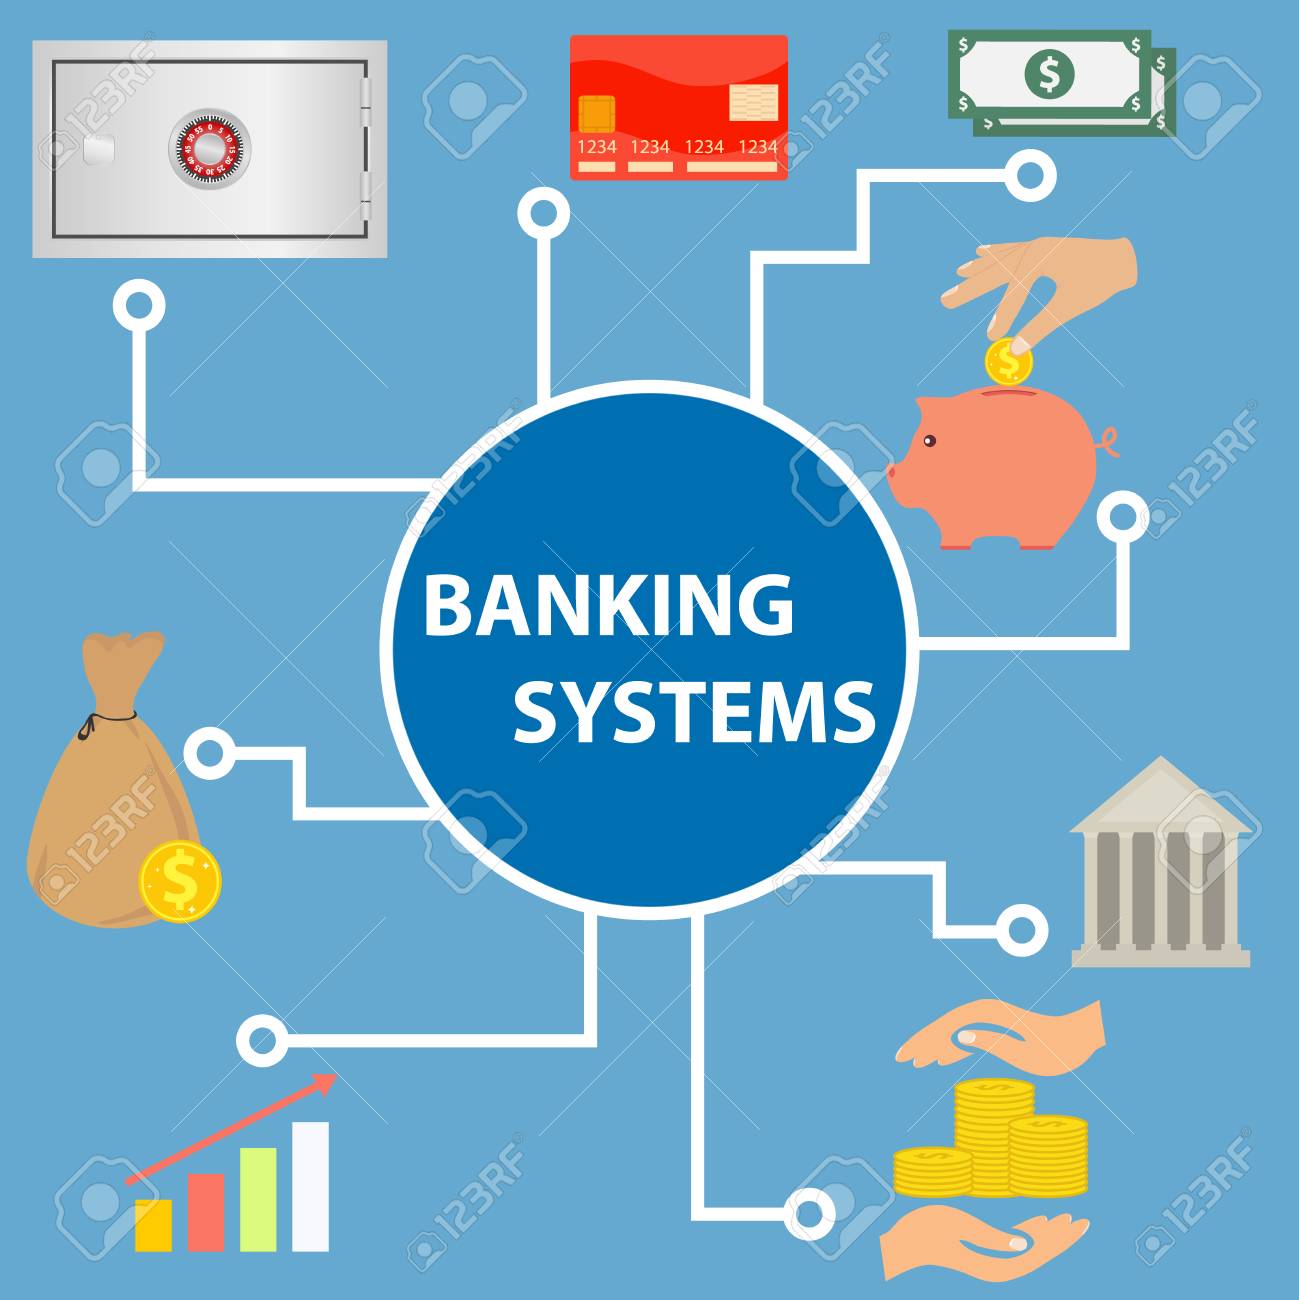 Vietnam Banking System - Banks in Vietnam